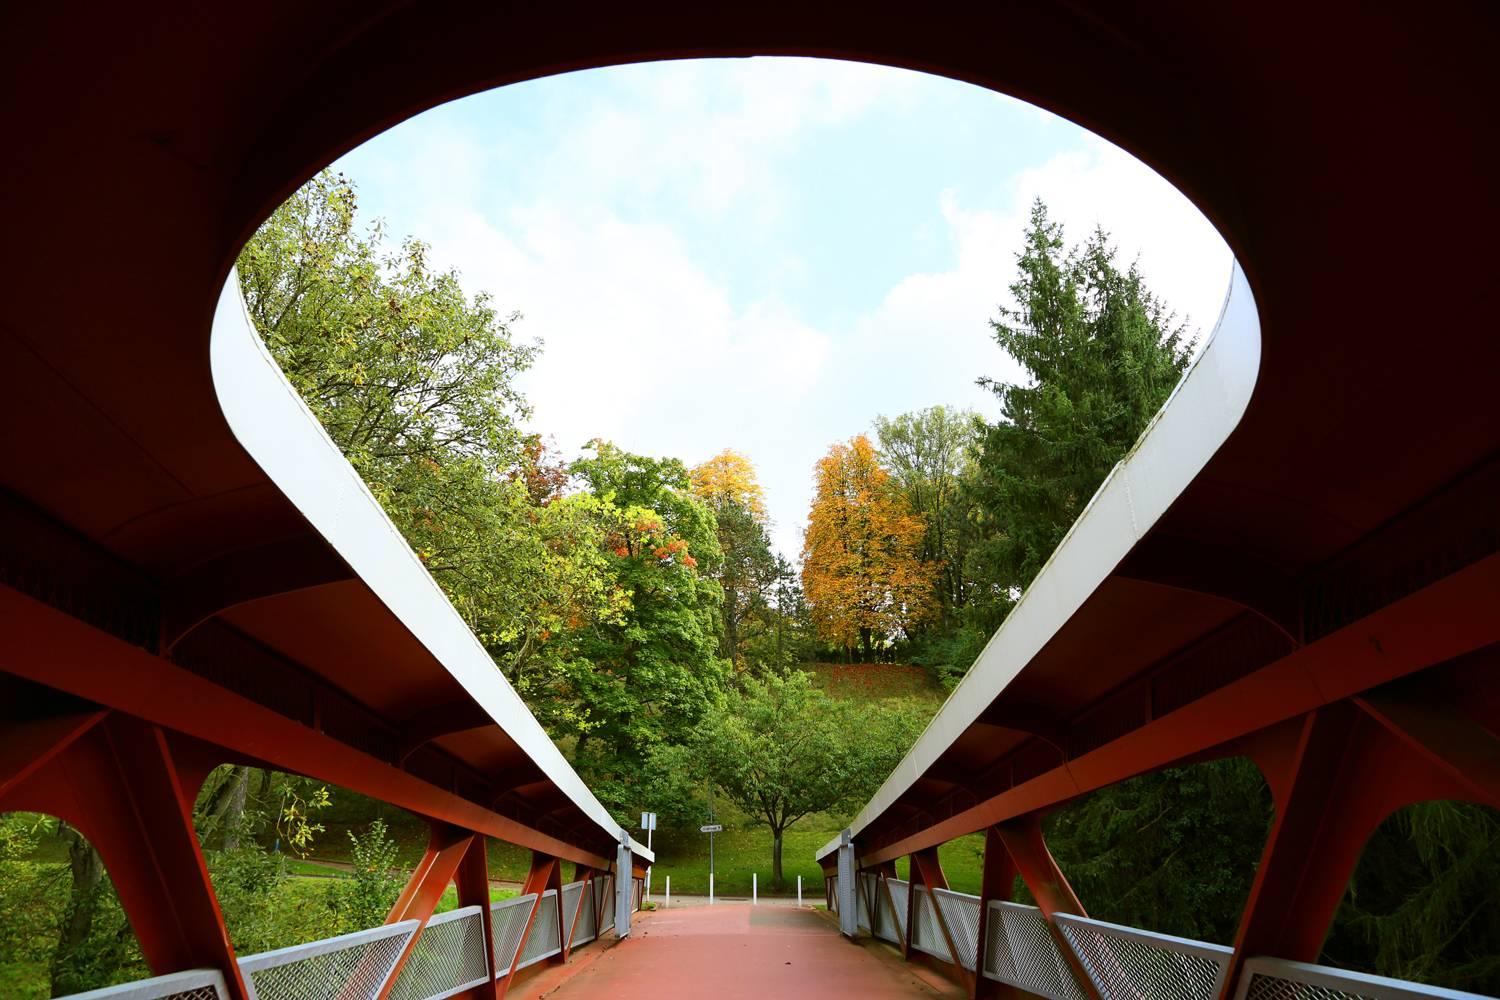 Esch-sur-Alzette Footbridge, Grand Duchy of Luxembourg